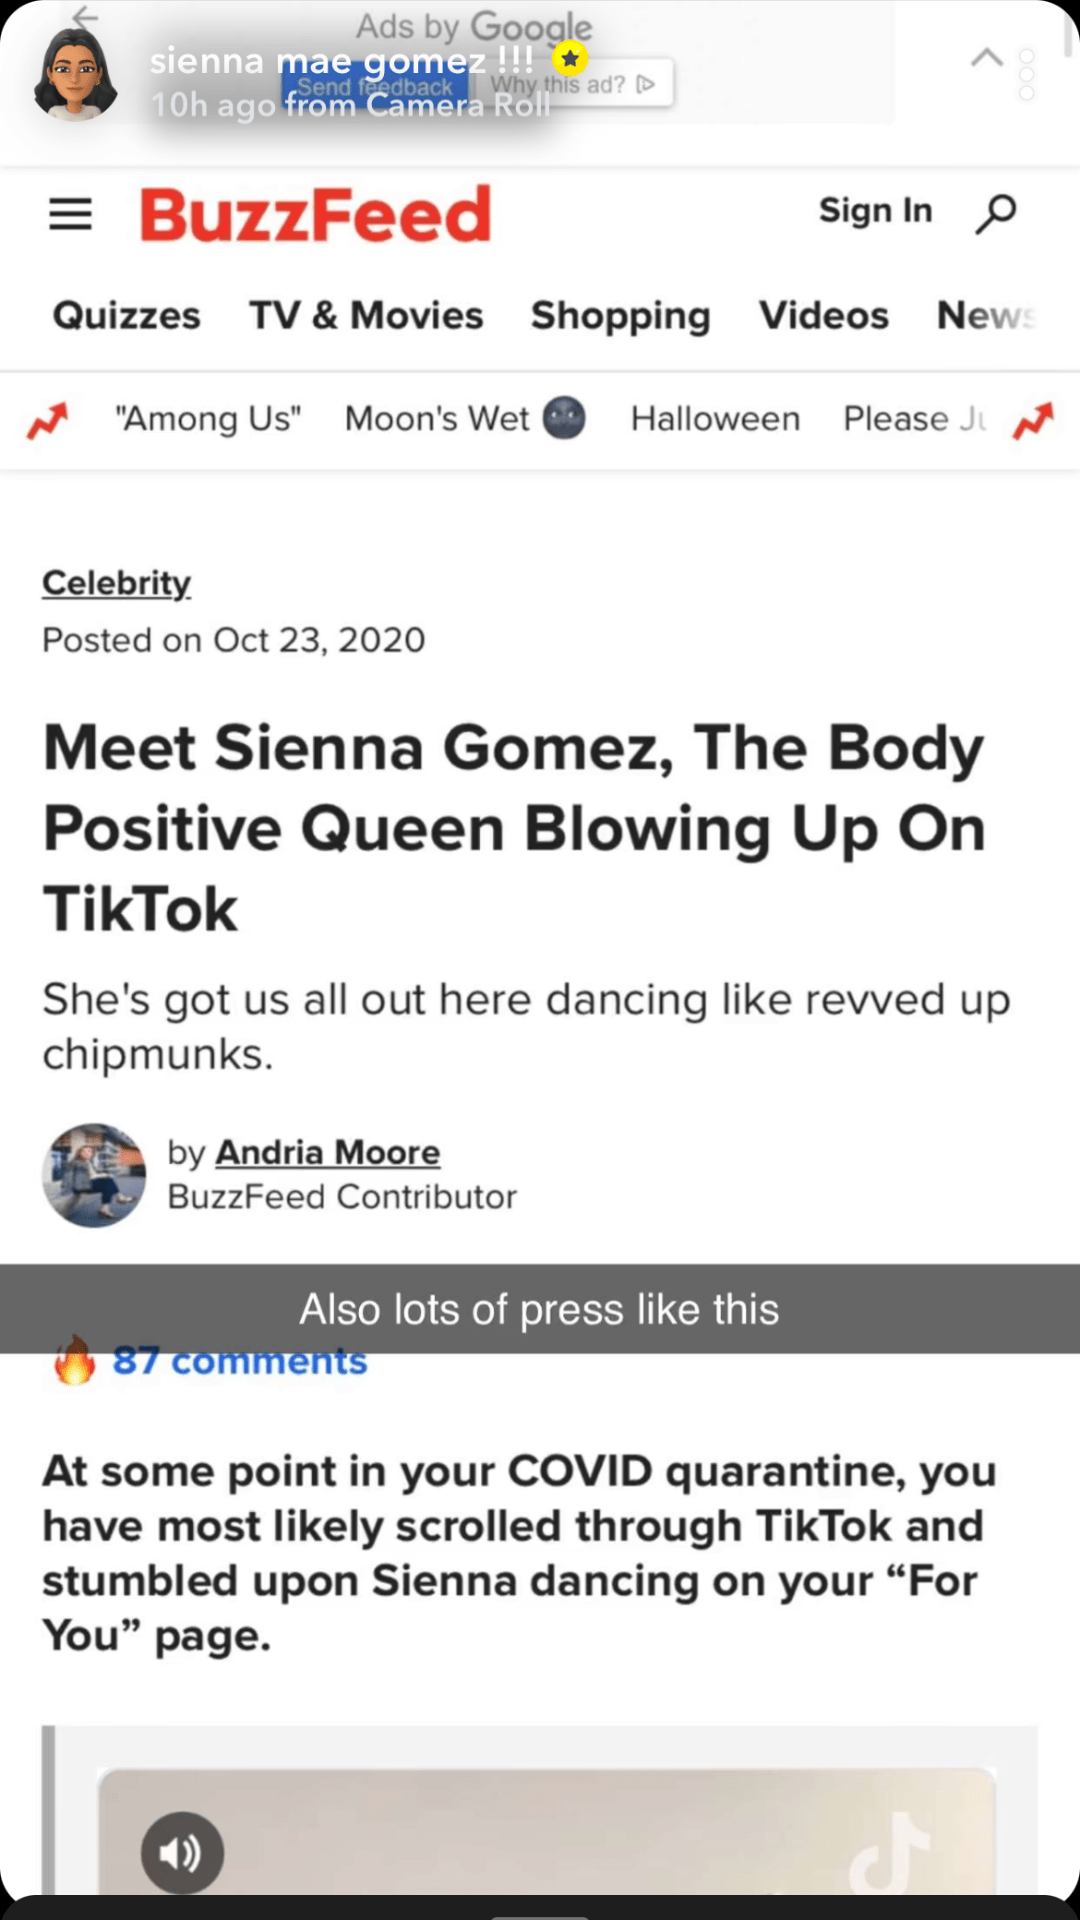 Screenshot of a news article about tiktoker Sienna Mae